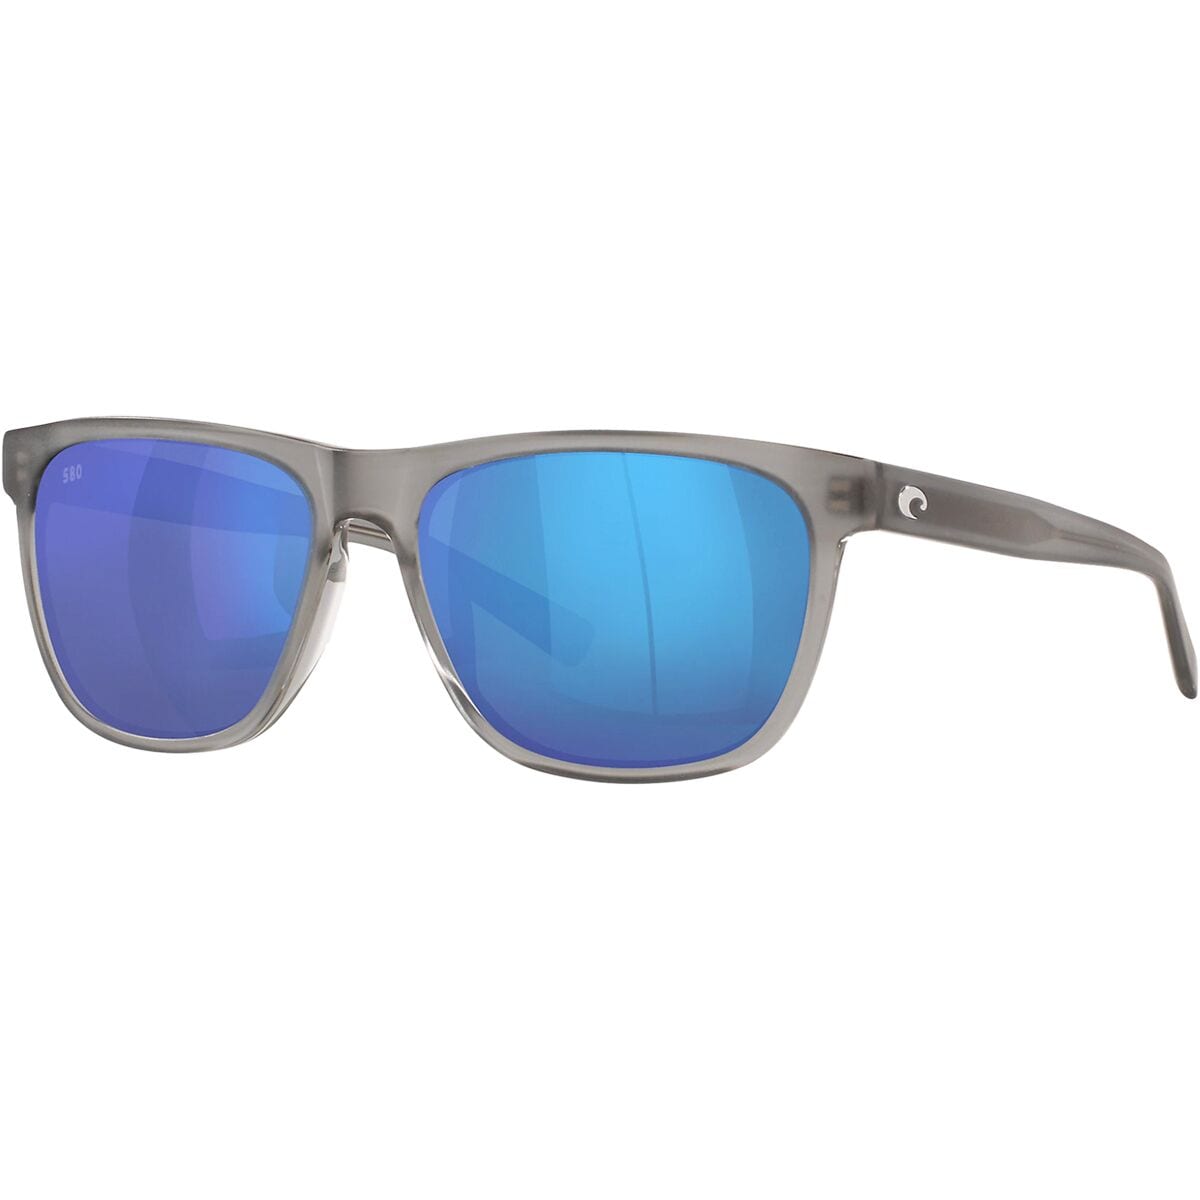 Costa Apalach 580G Polarized Sunglasses